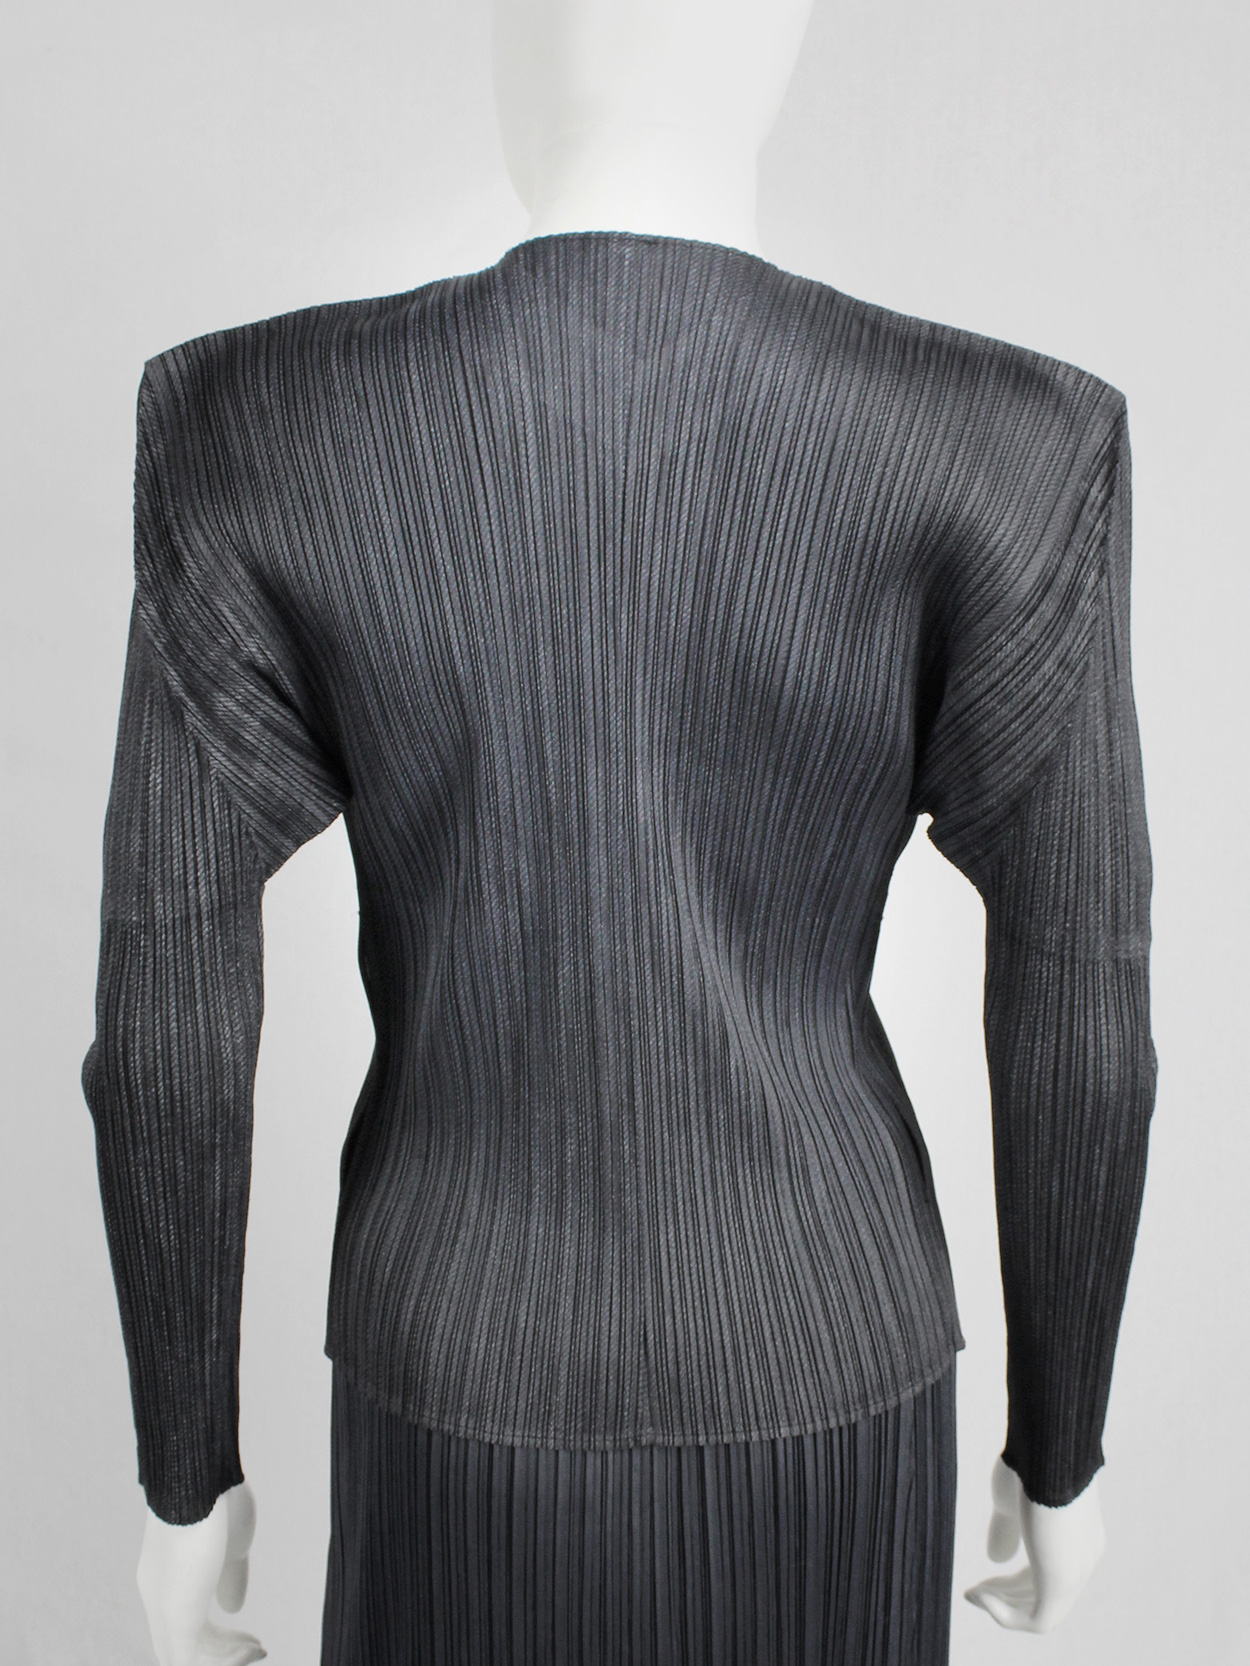 Issey Miyake Pleats Please dark grey button-up cardigan - V A N II T A S